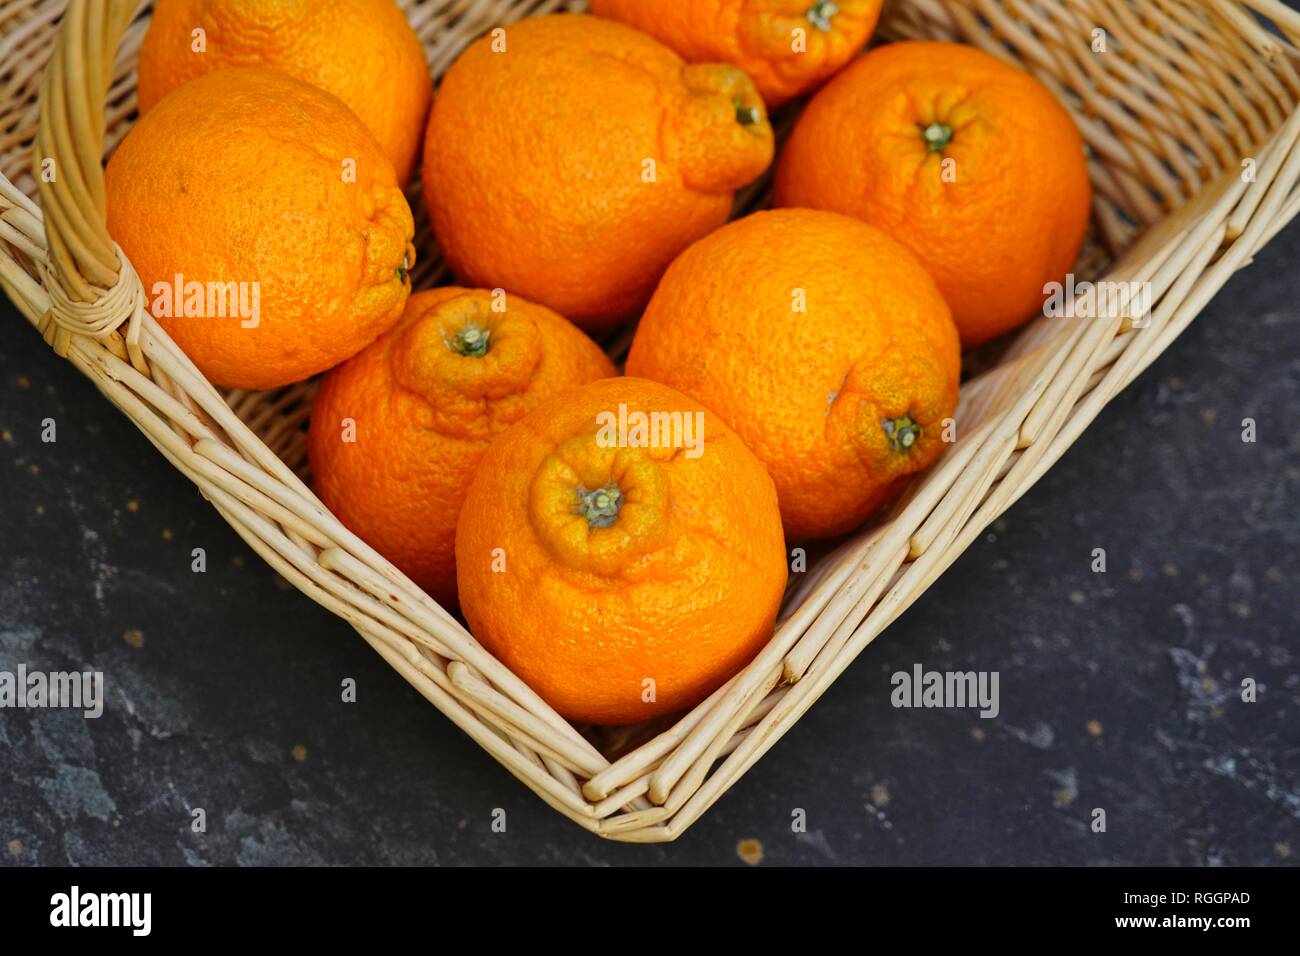 https://c8.alamy.com/comp/RGGPAD/sumo-citrus-giant-mandarin-orange-fruit-RGGPAD.jpg